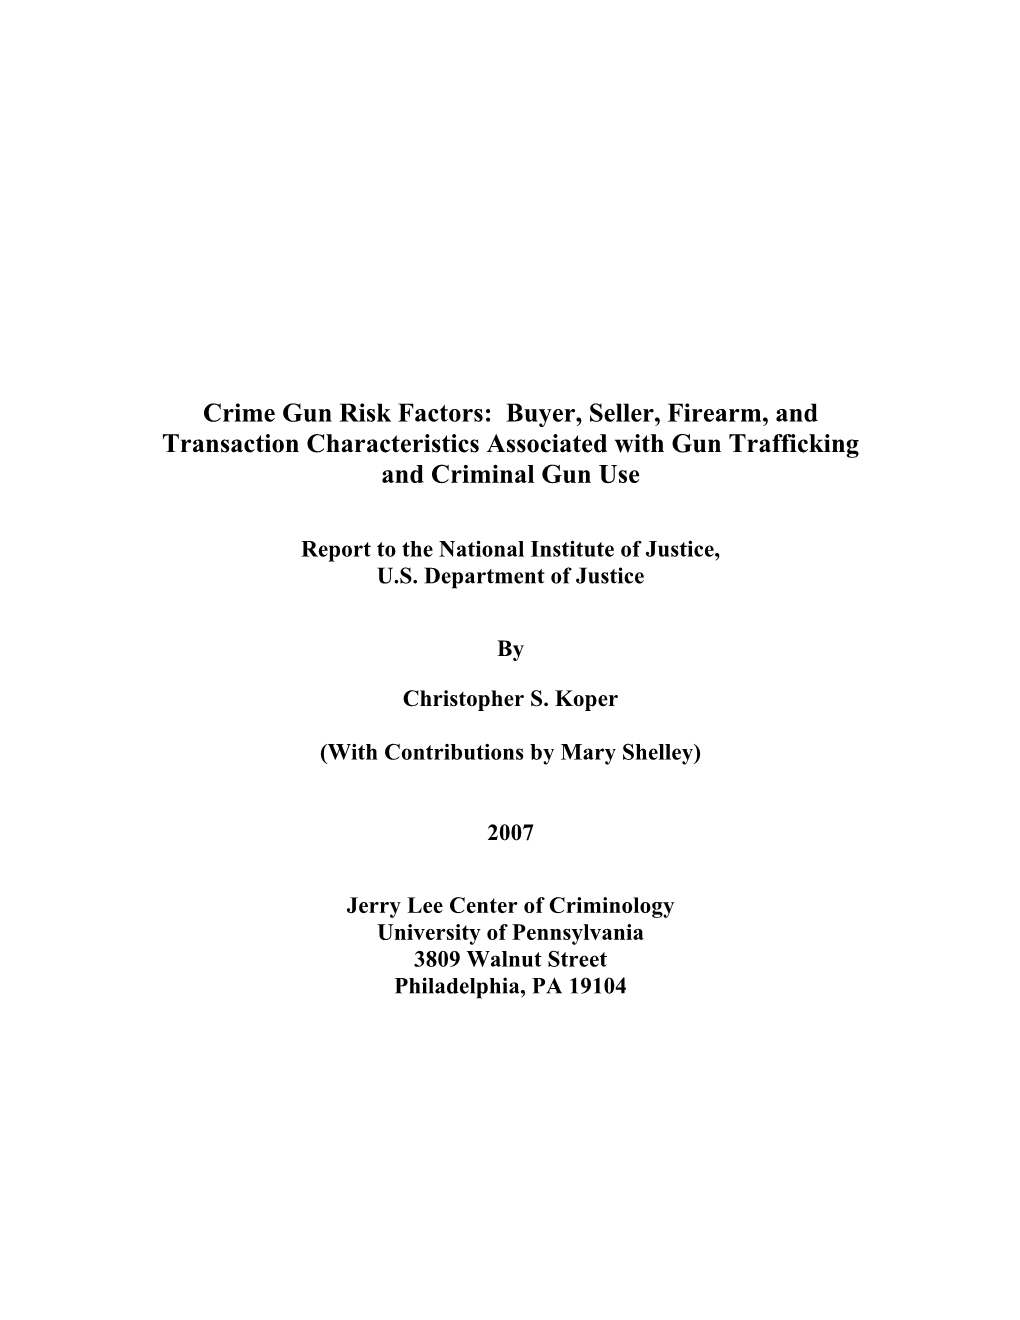 Crime Gun Risk Factors: Buyer, Seller, Firearm, and Transaction Characteristics Associated with Gun Trafficking and Criminal Gun Use